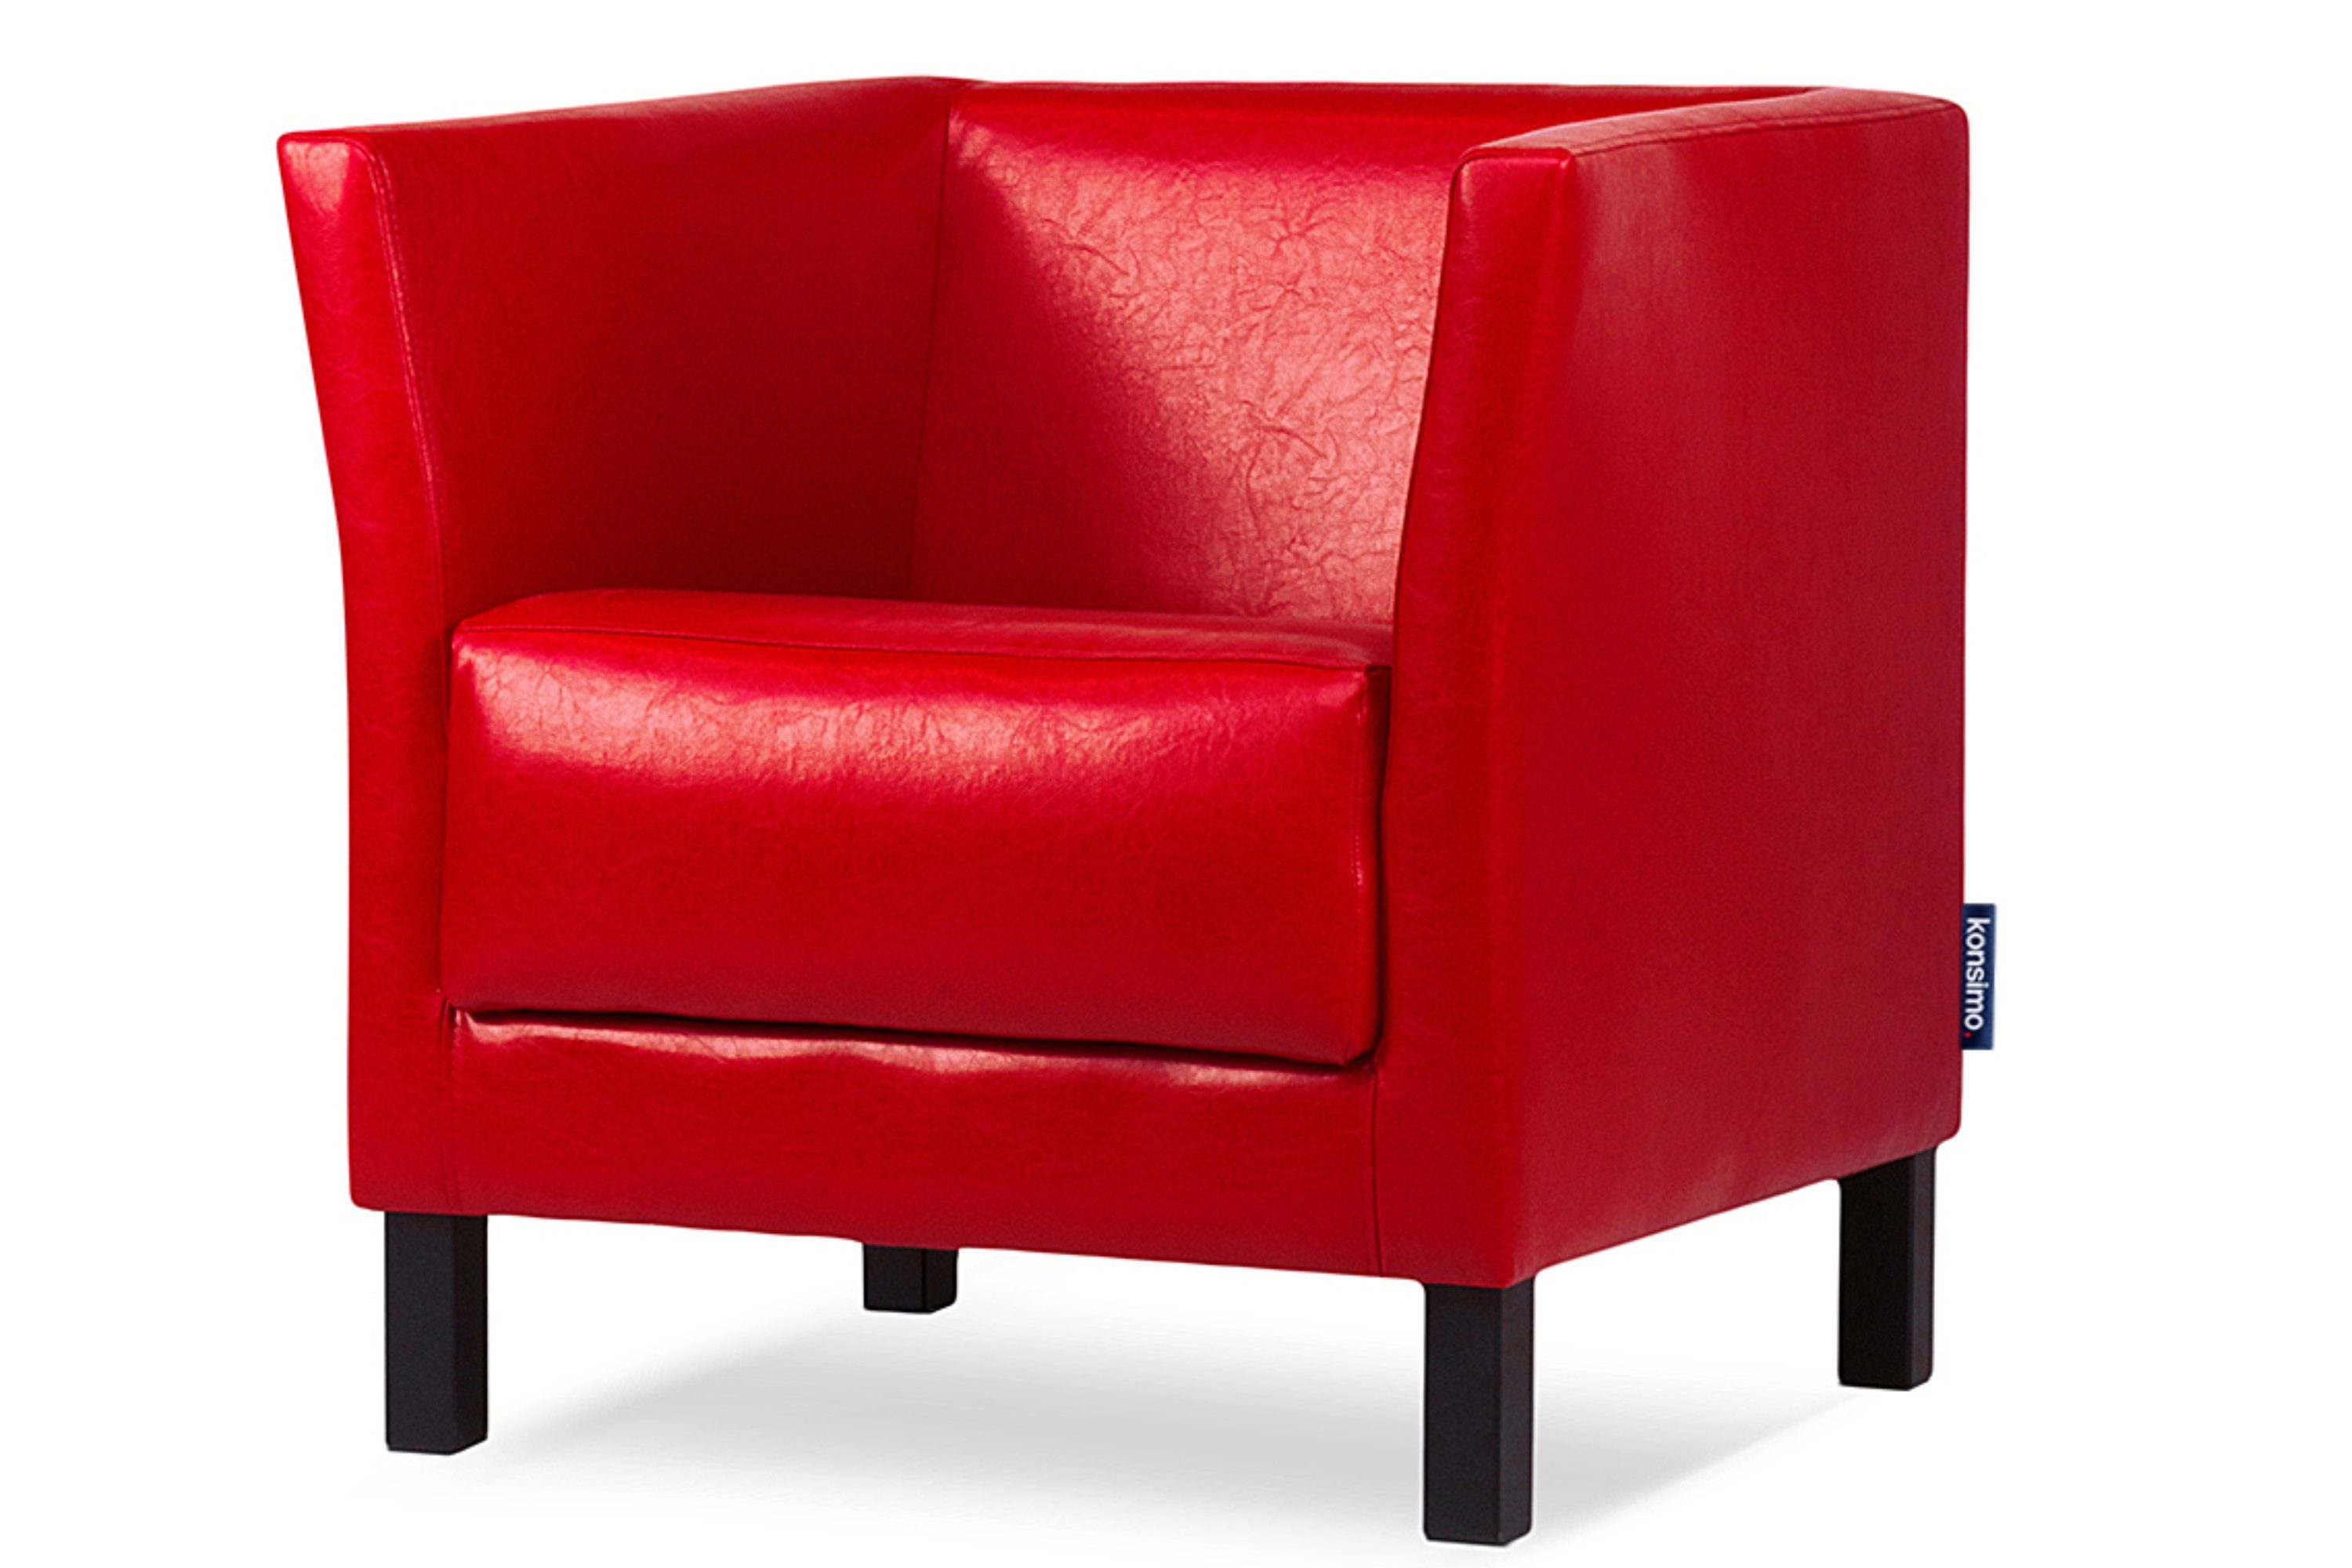 Konsimo Sessel ESPECTO Sessel, hohe Massivholzbeine, weiche Sitzfläche und hohe Rückenlehne, Kunstleder rot | rot | rot